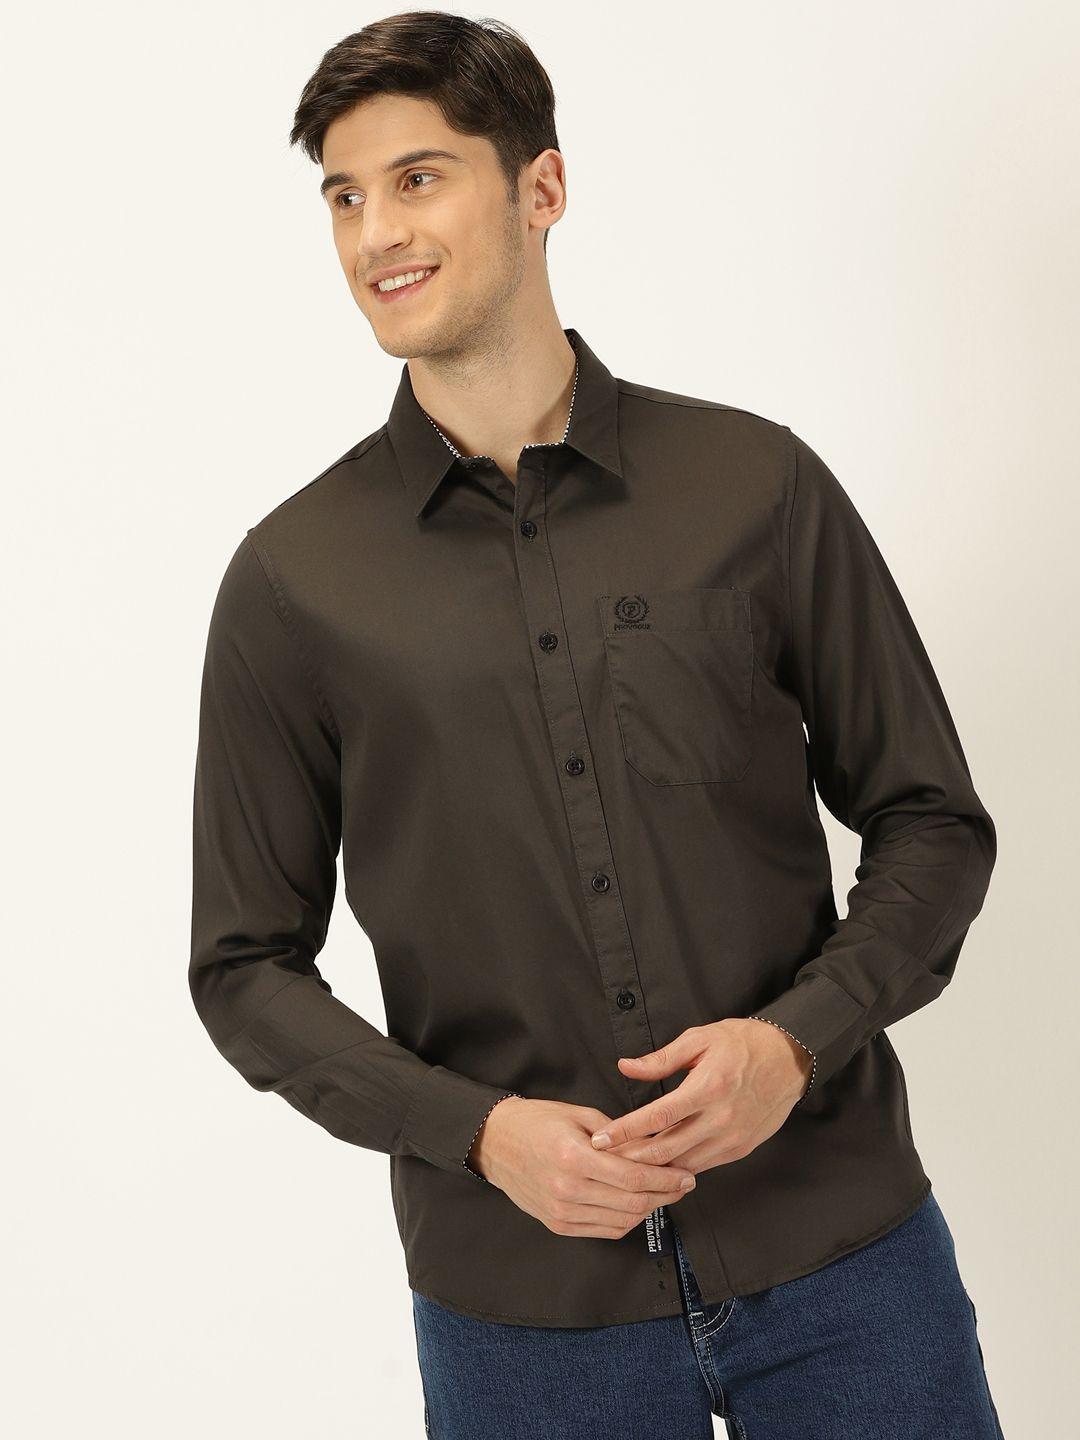 provogue-original-slim-fit-spread-collar-long-sleeves-cotton-casual-shirt